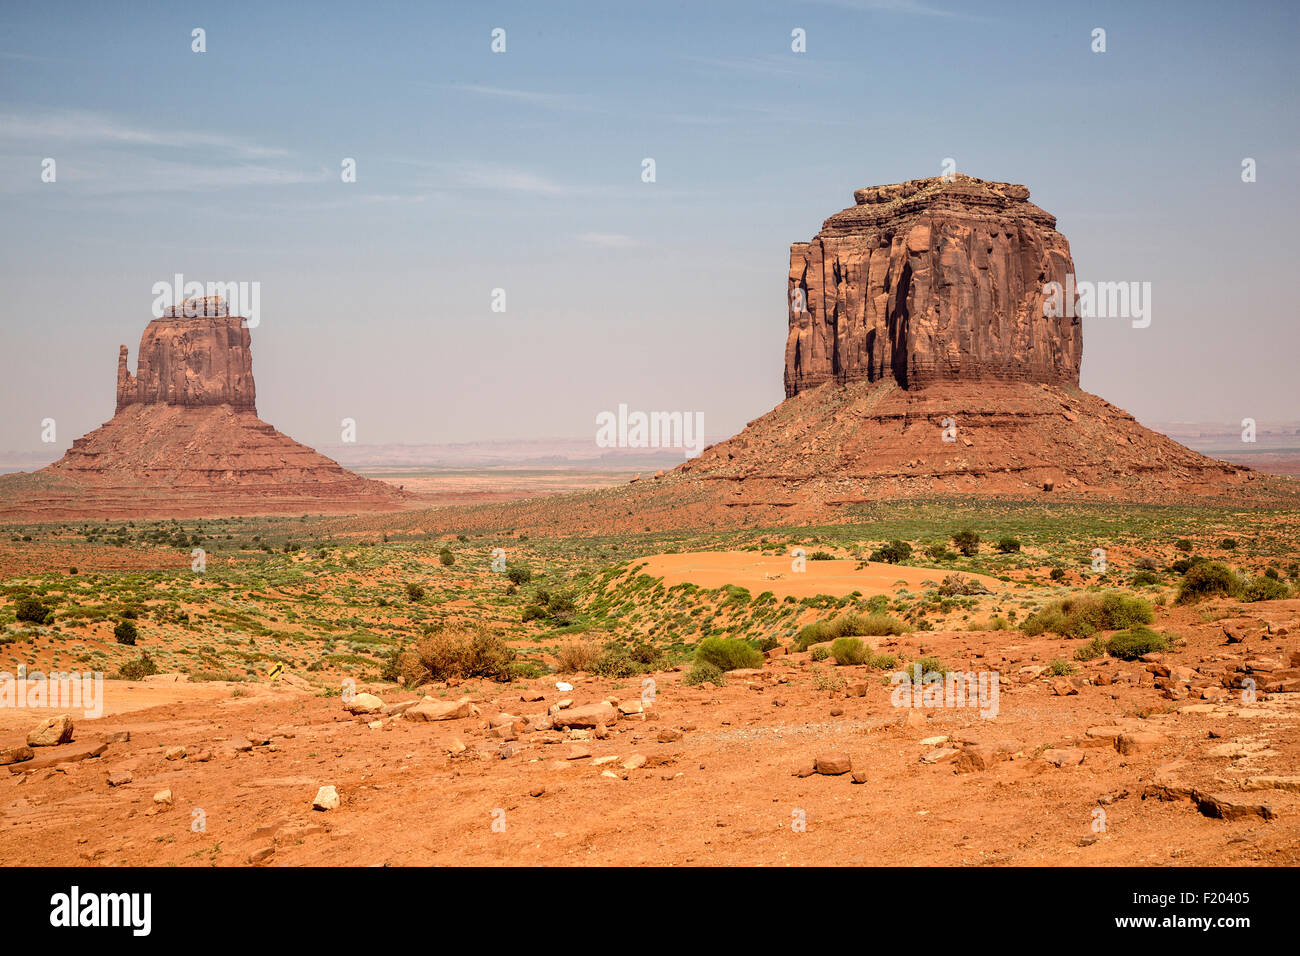 Monument Vallei, Utah y Arizona, EE.UU. panorama Foto de stock